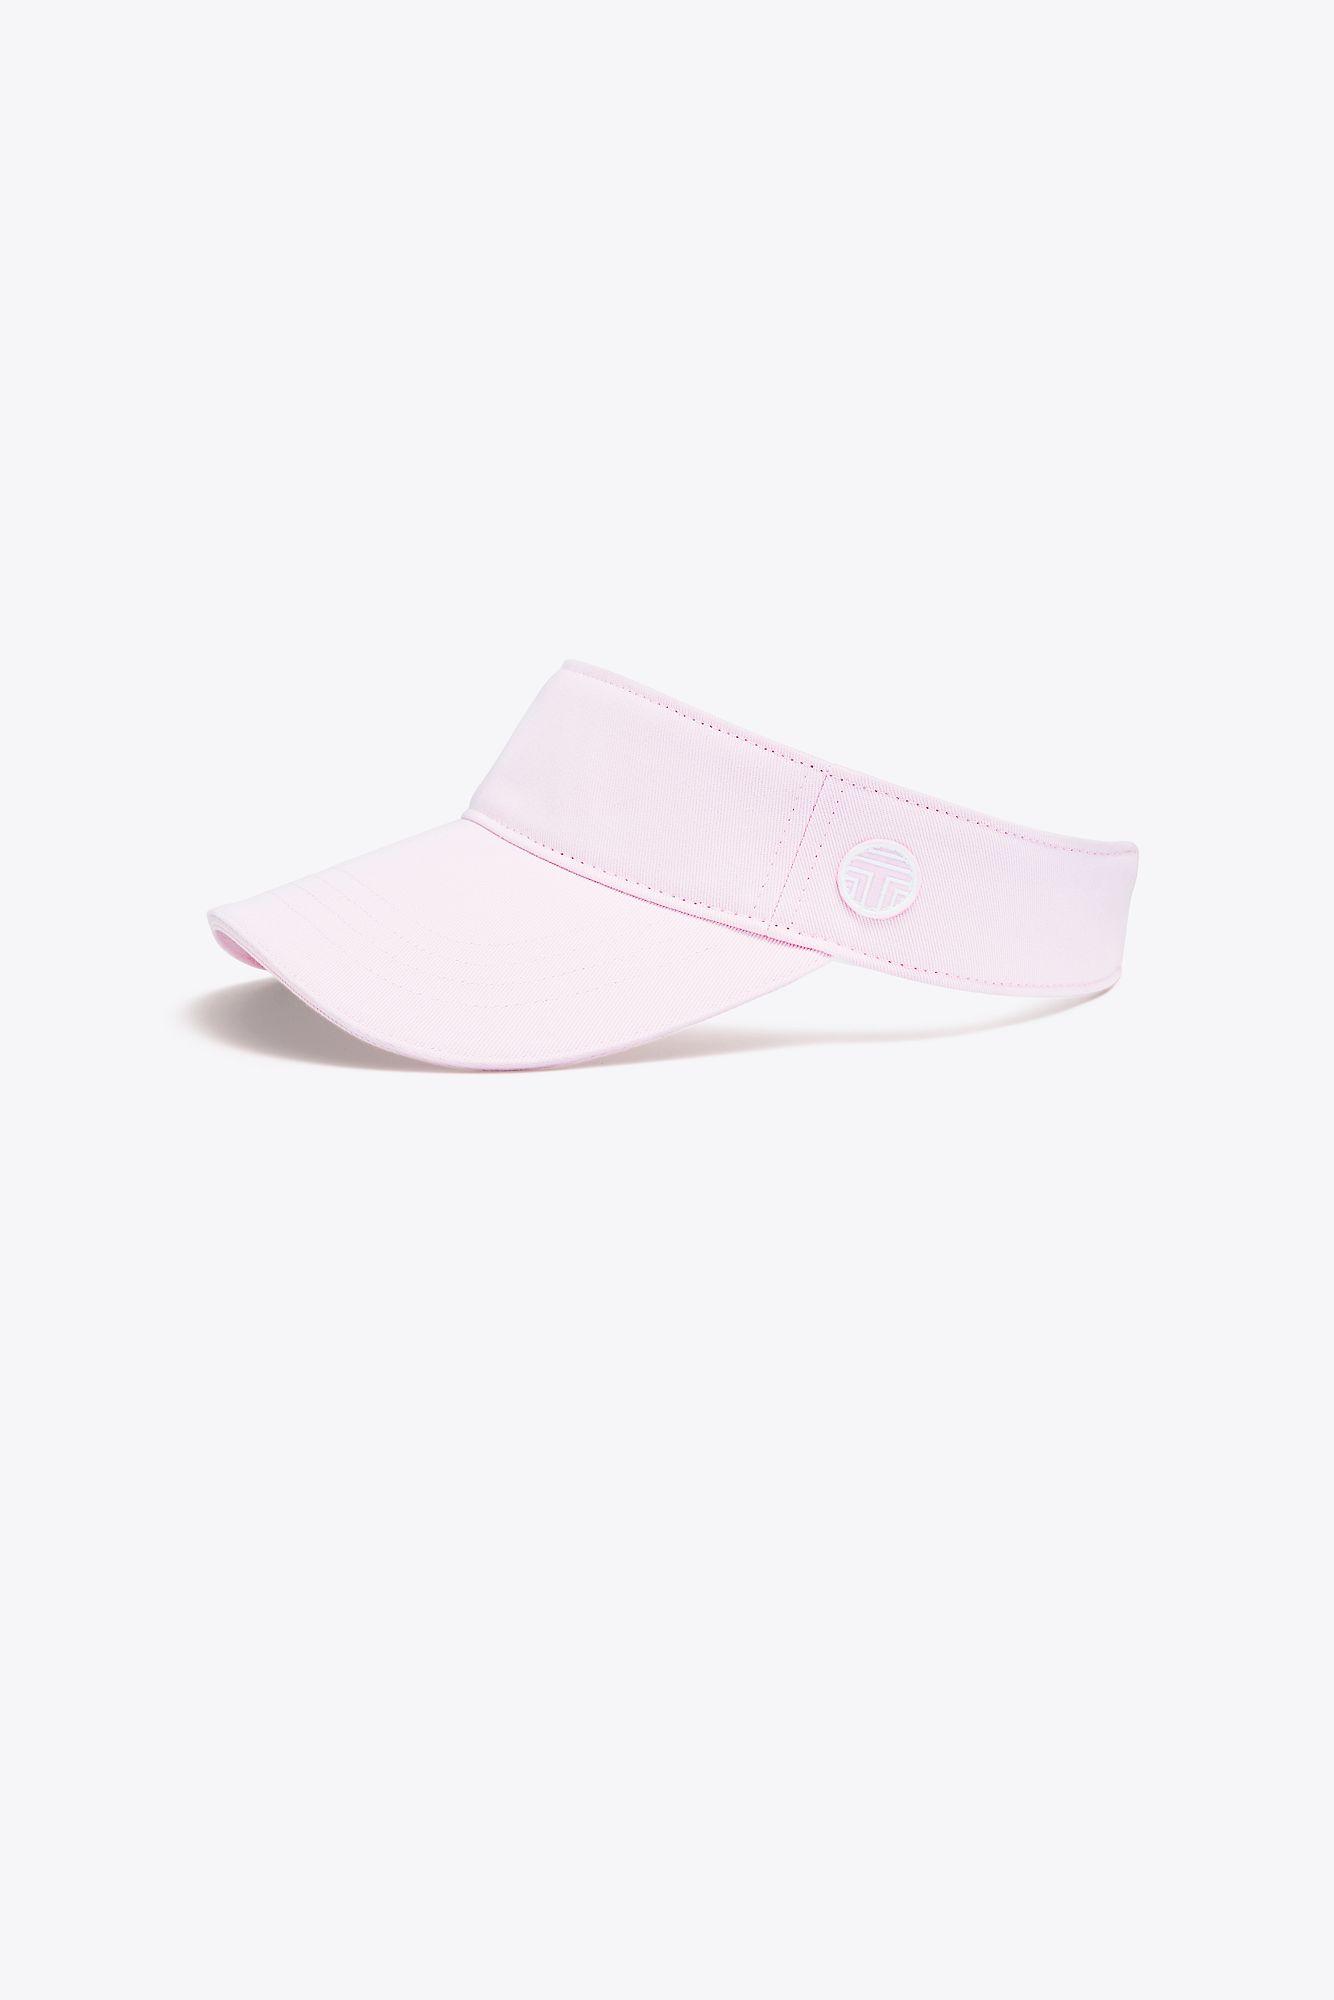 Tory Sport Cotton Adjustable Performance Visor in Pink | Lyst